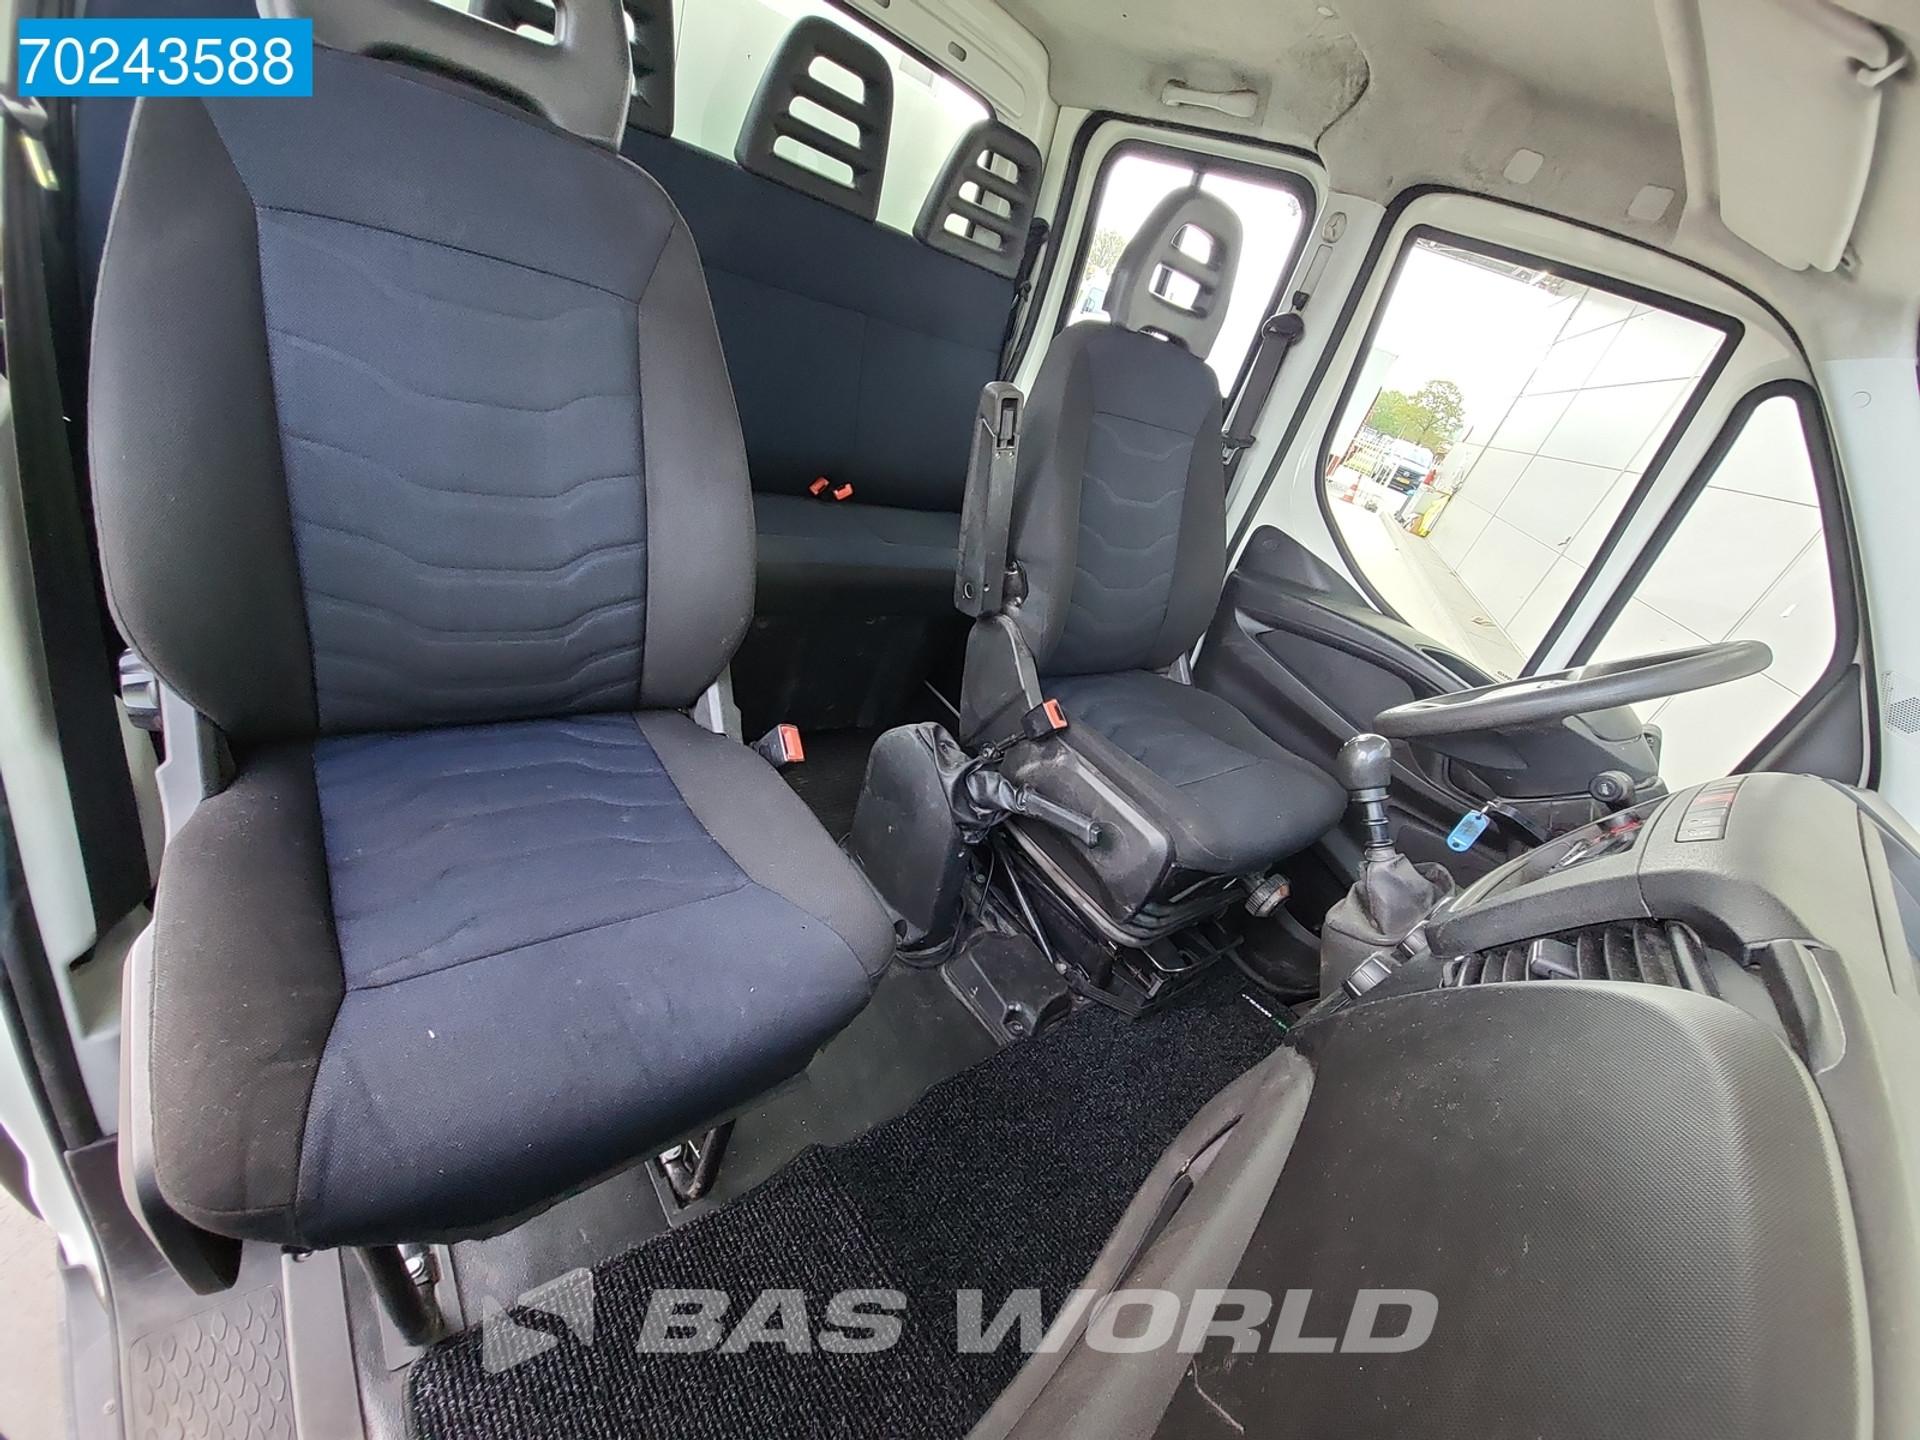 Foto 11 van Iveco Daily 35C12 Kipper met Kist Dubbel Cabine Euro6 3500kg trekhaak Tipper Benne Kieper Dubbel cabine Trekhaak